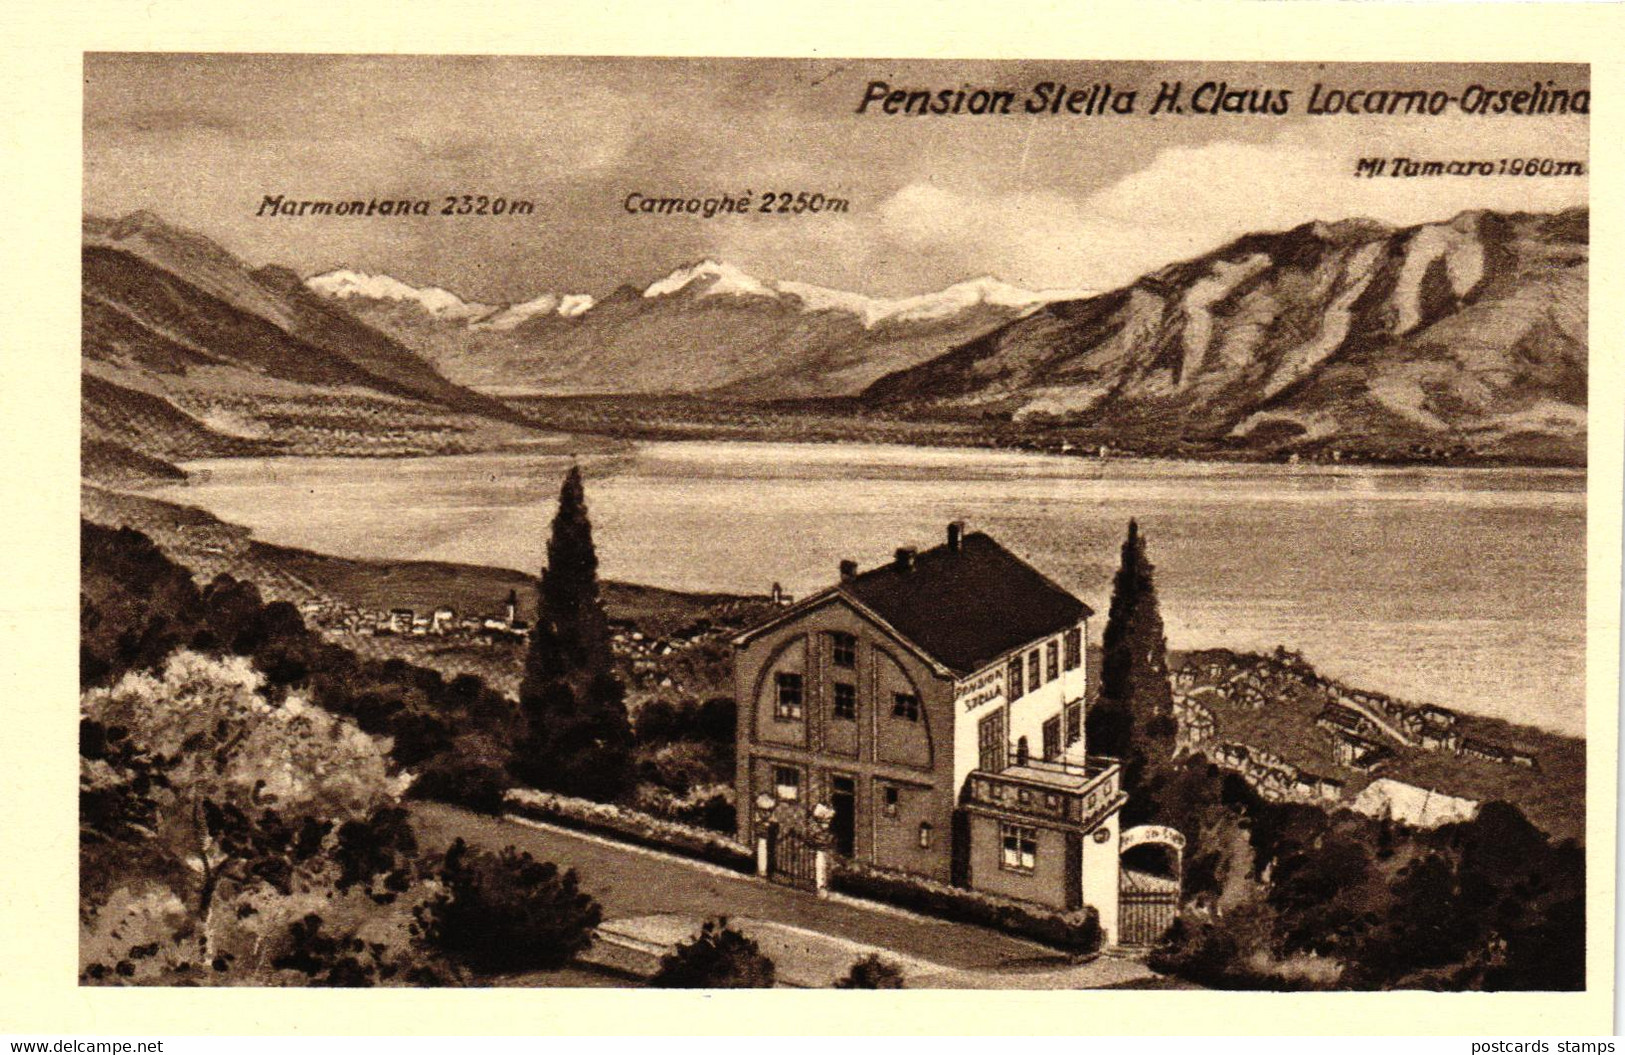 Locarno - Orselina, Pension Stella H. Claus, Um 1920/39  (Werbekarte, Keine AK) - Orselina